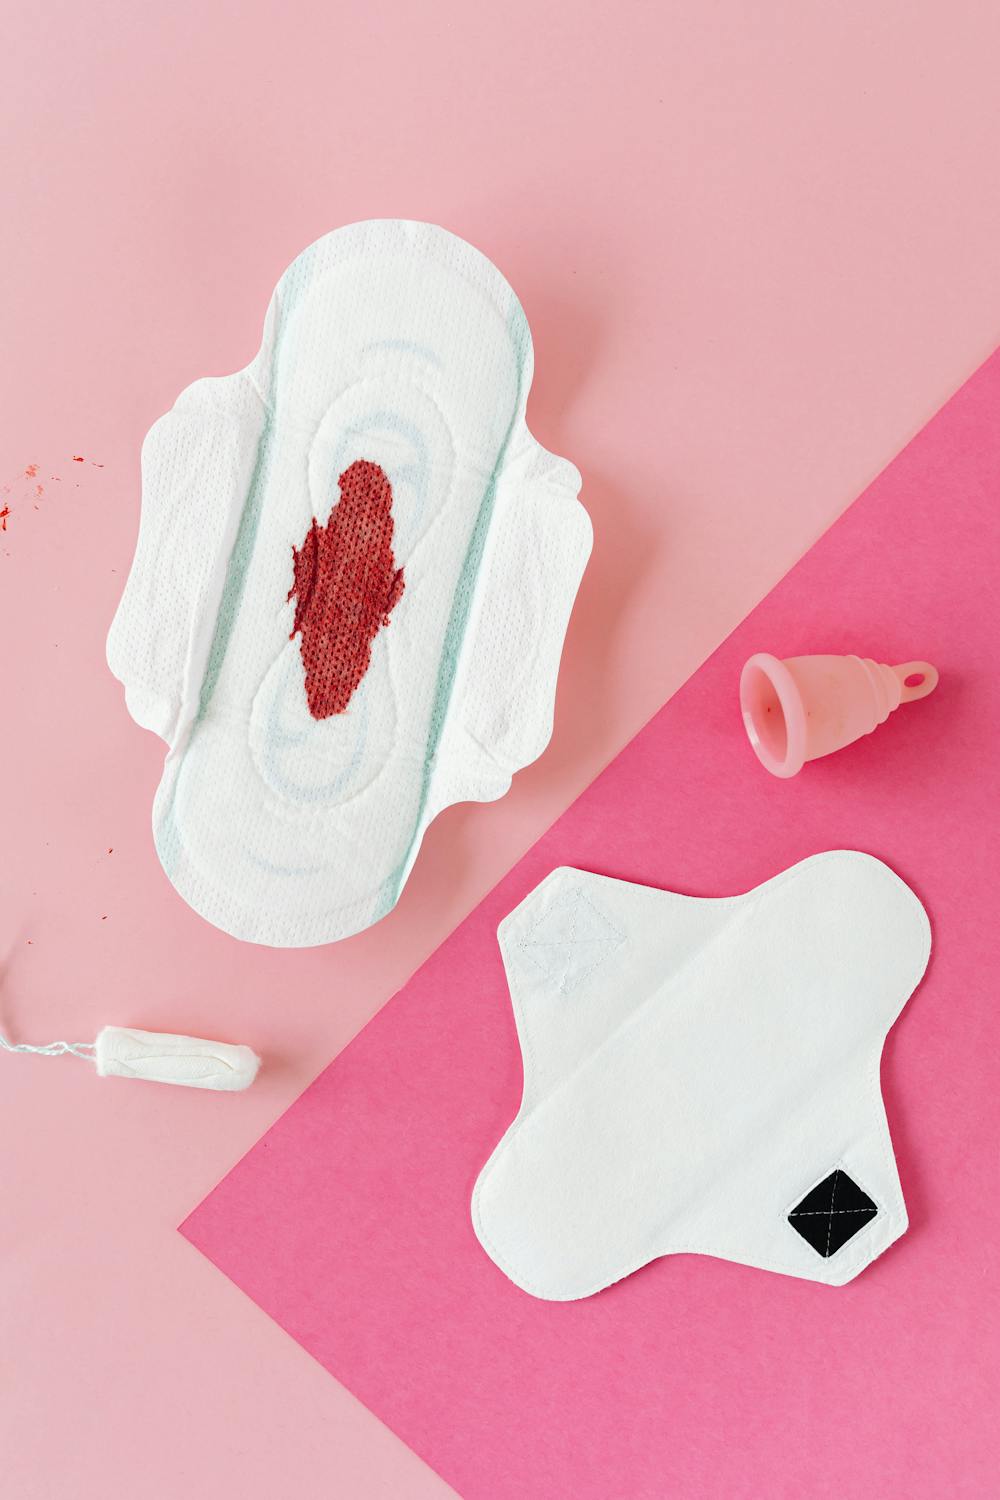 Menstrual Cup vs Pembalut